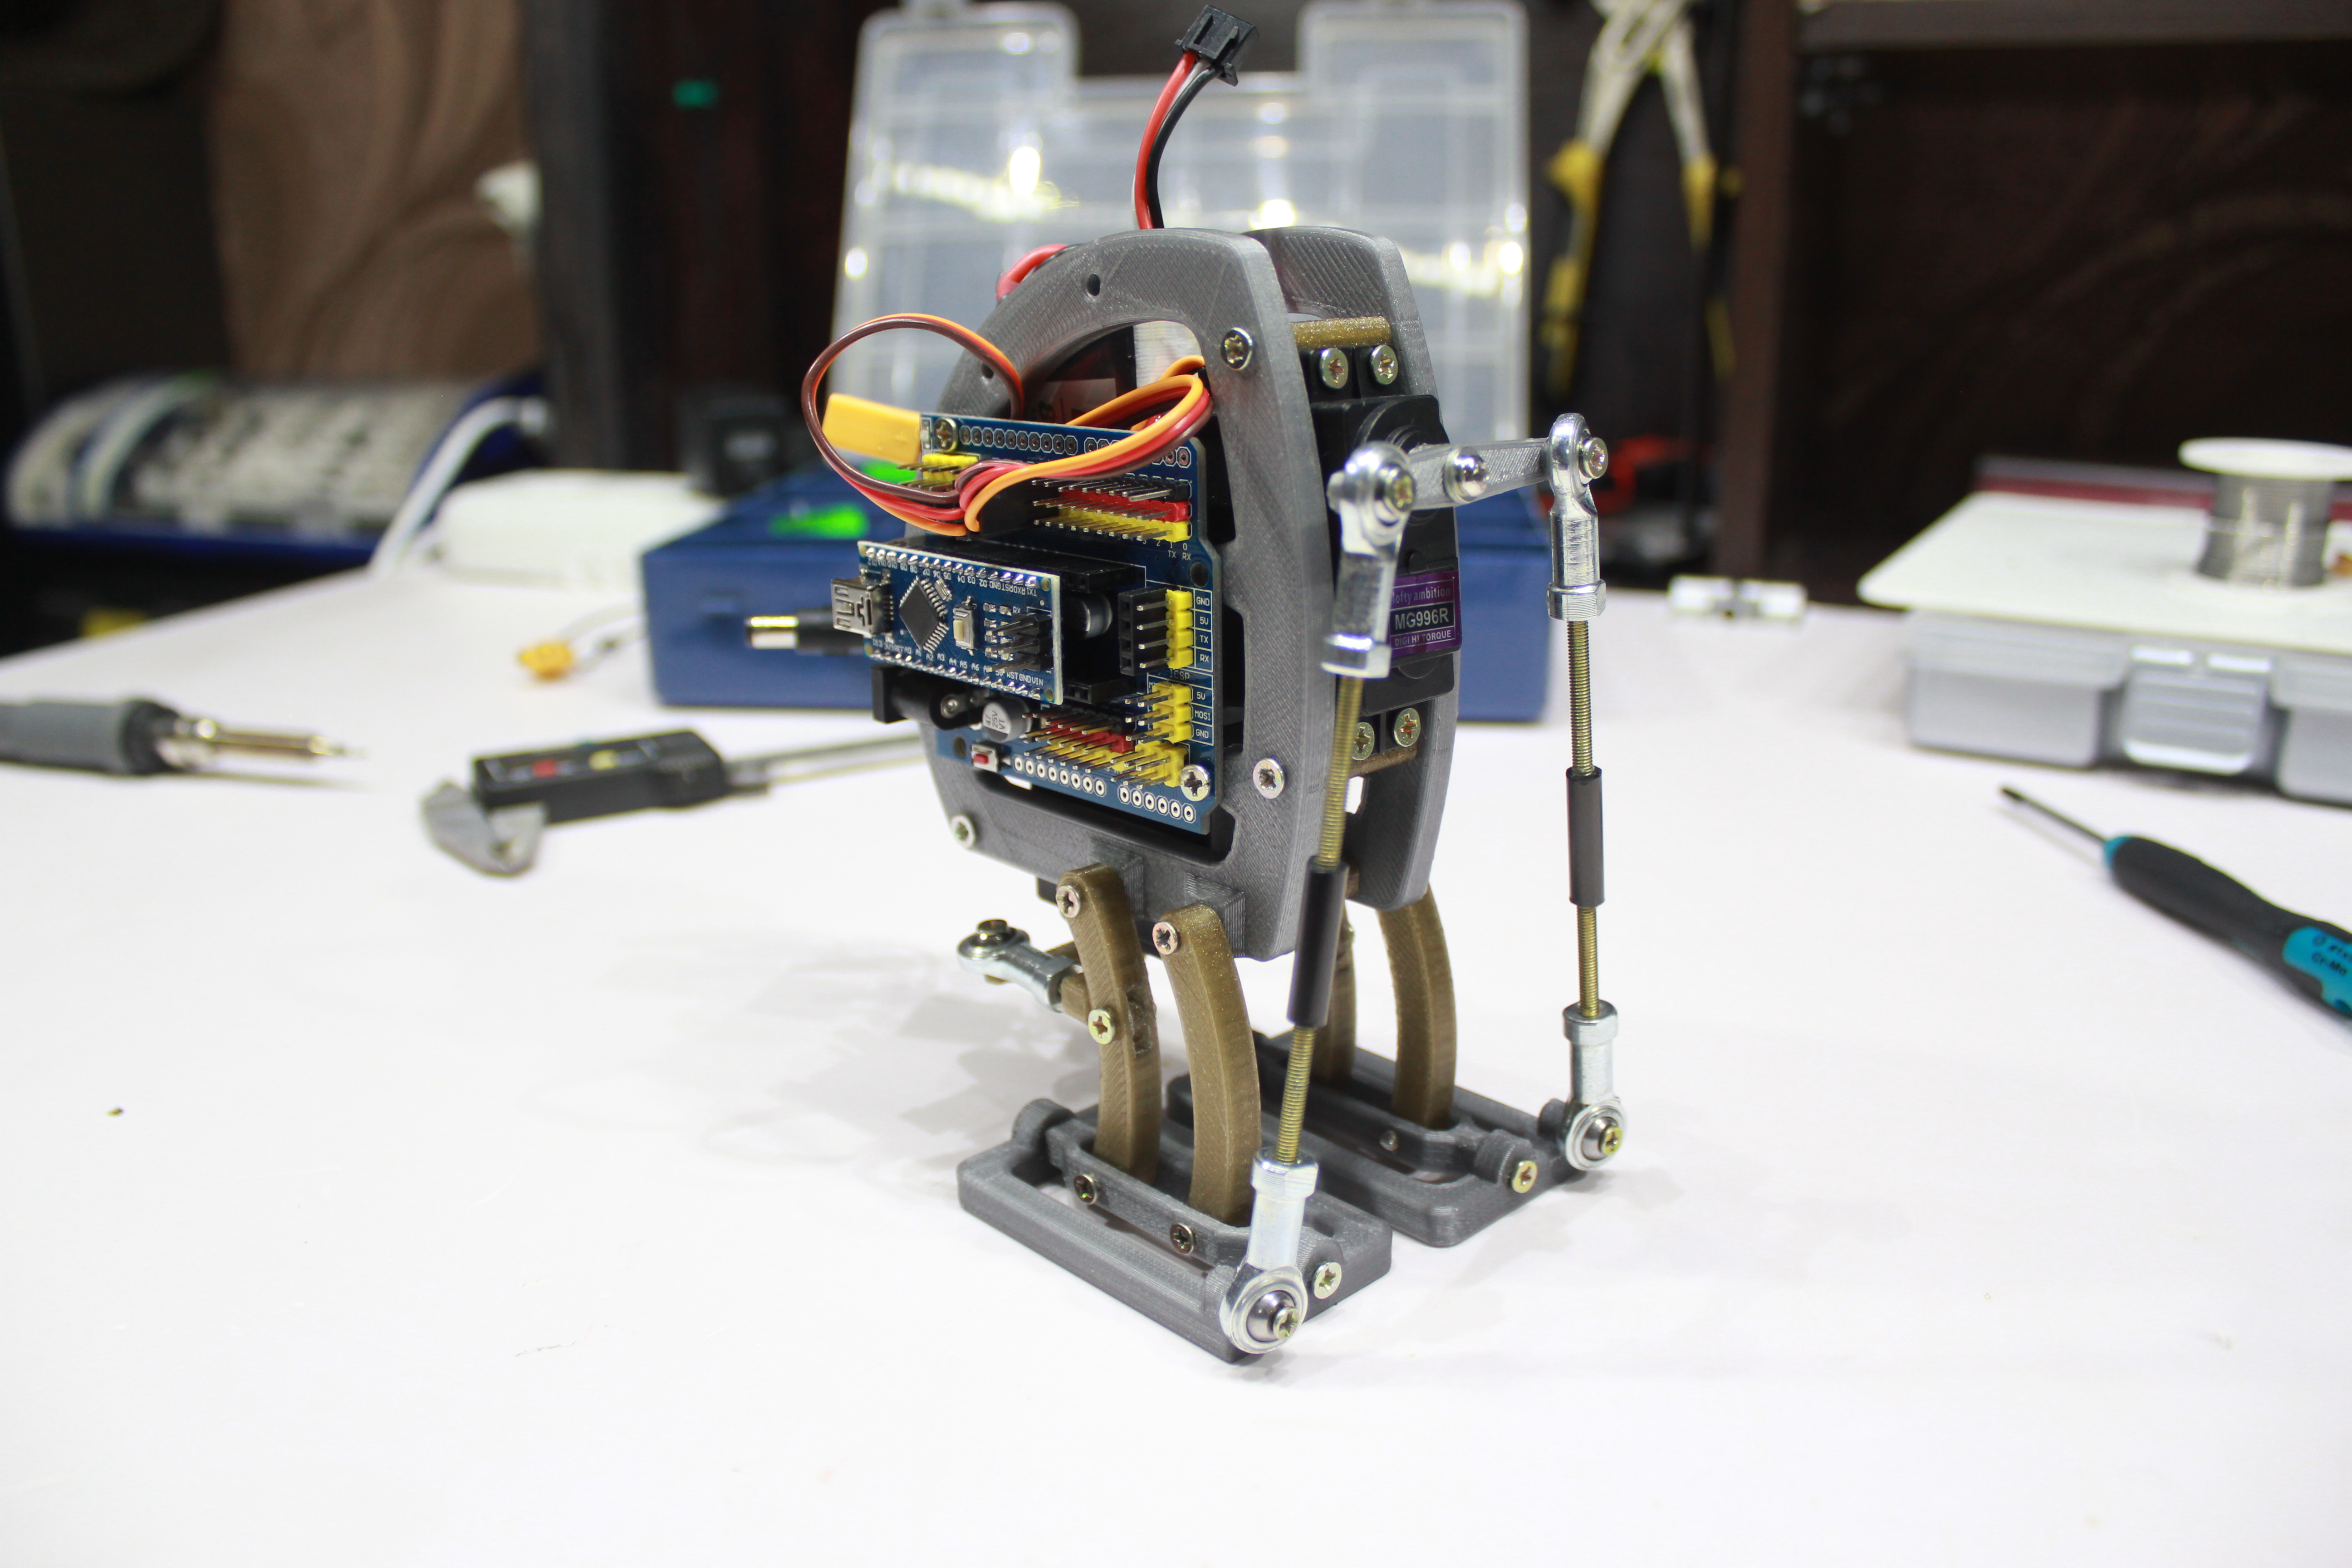 Robot project. Робот шагоход на ардуино. Шагающий робот на ардуино. Ардуино шагоход на сервоприводах. Шагающий двуногий роботом ардуино.